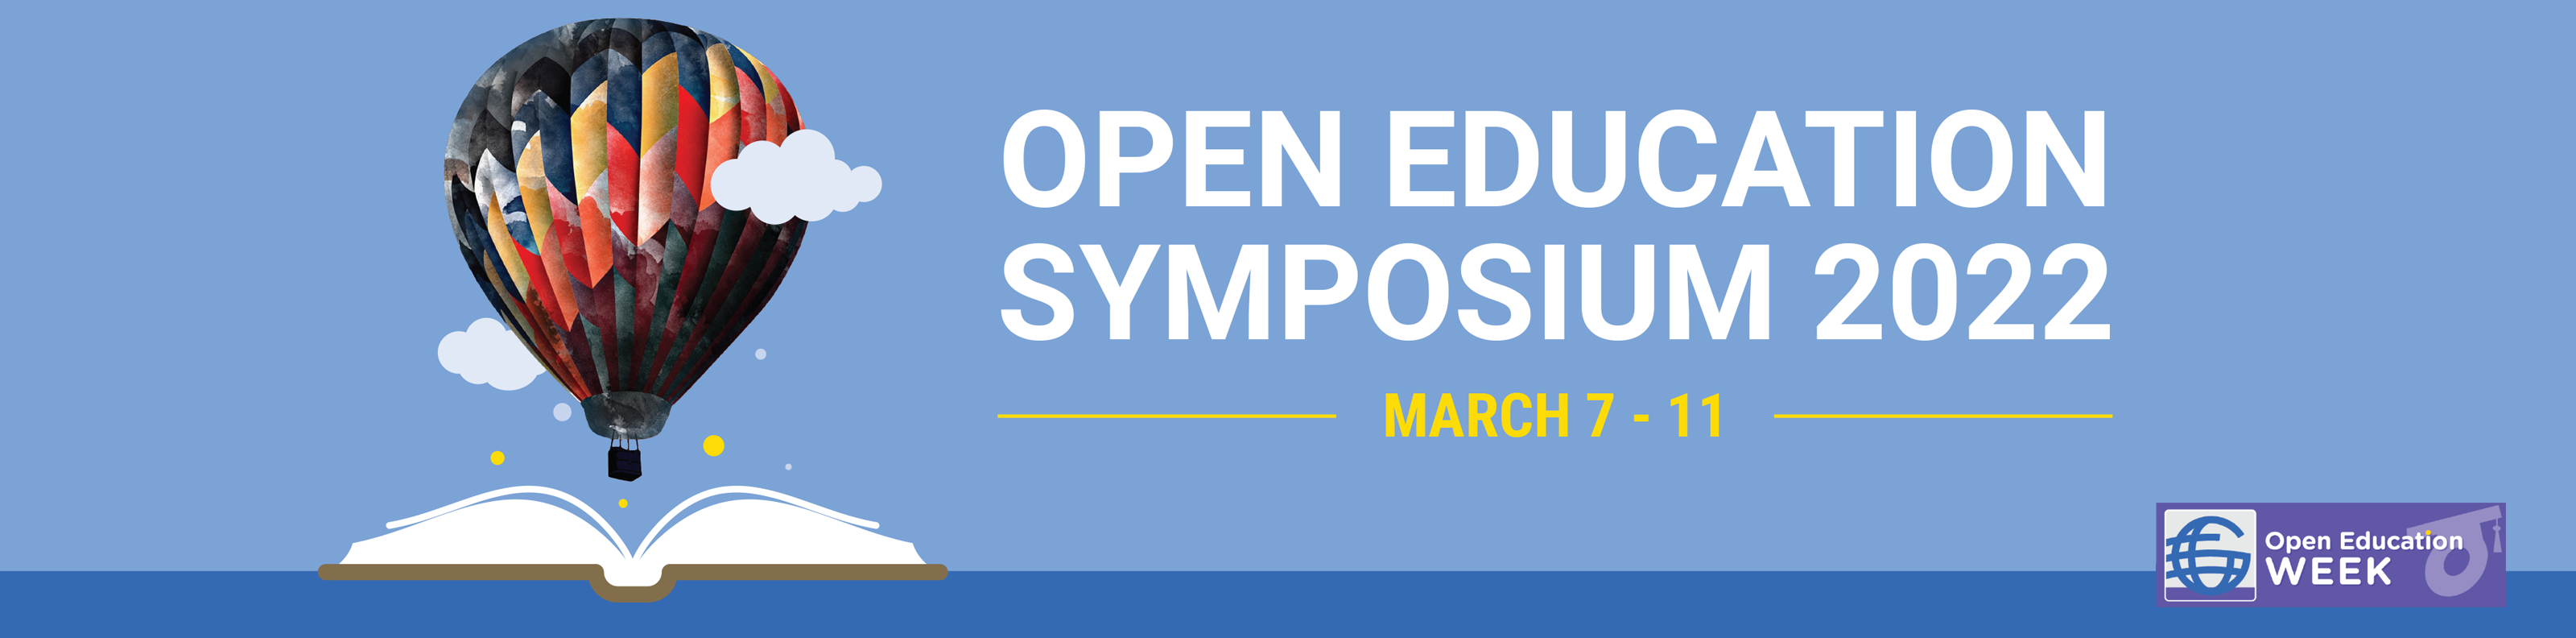 Open Education Symposium 2022